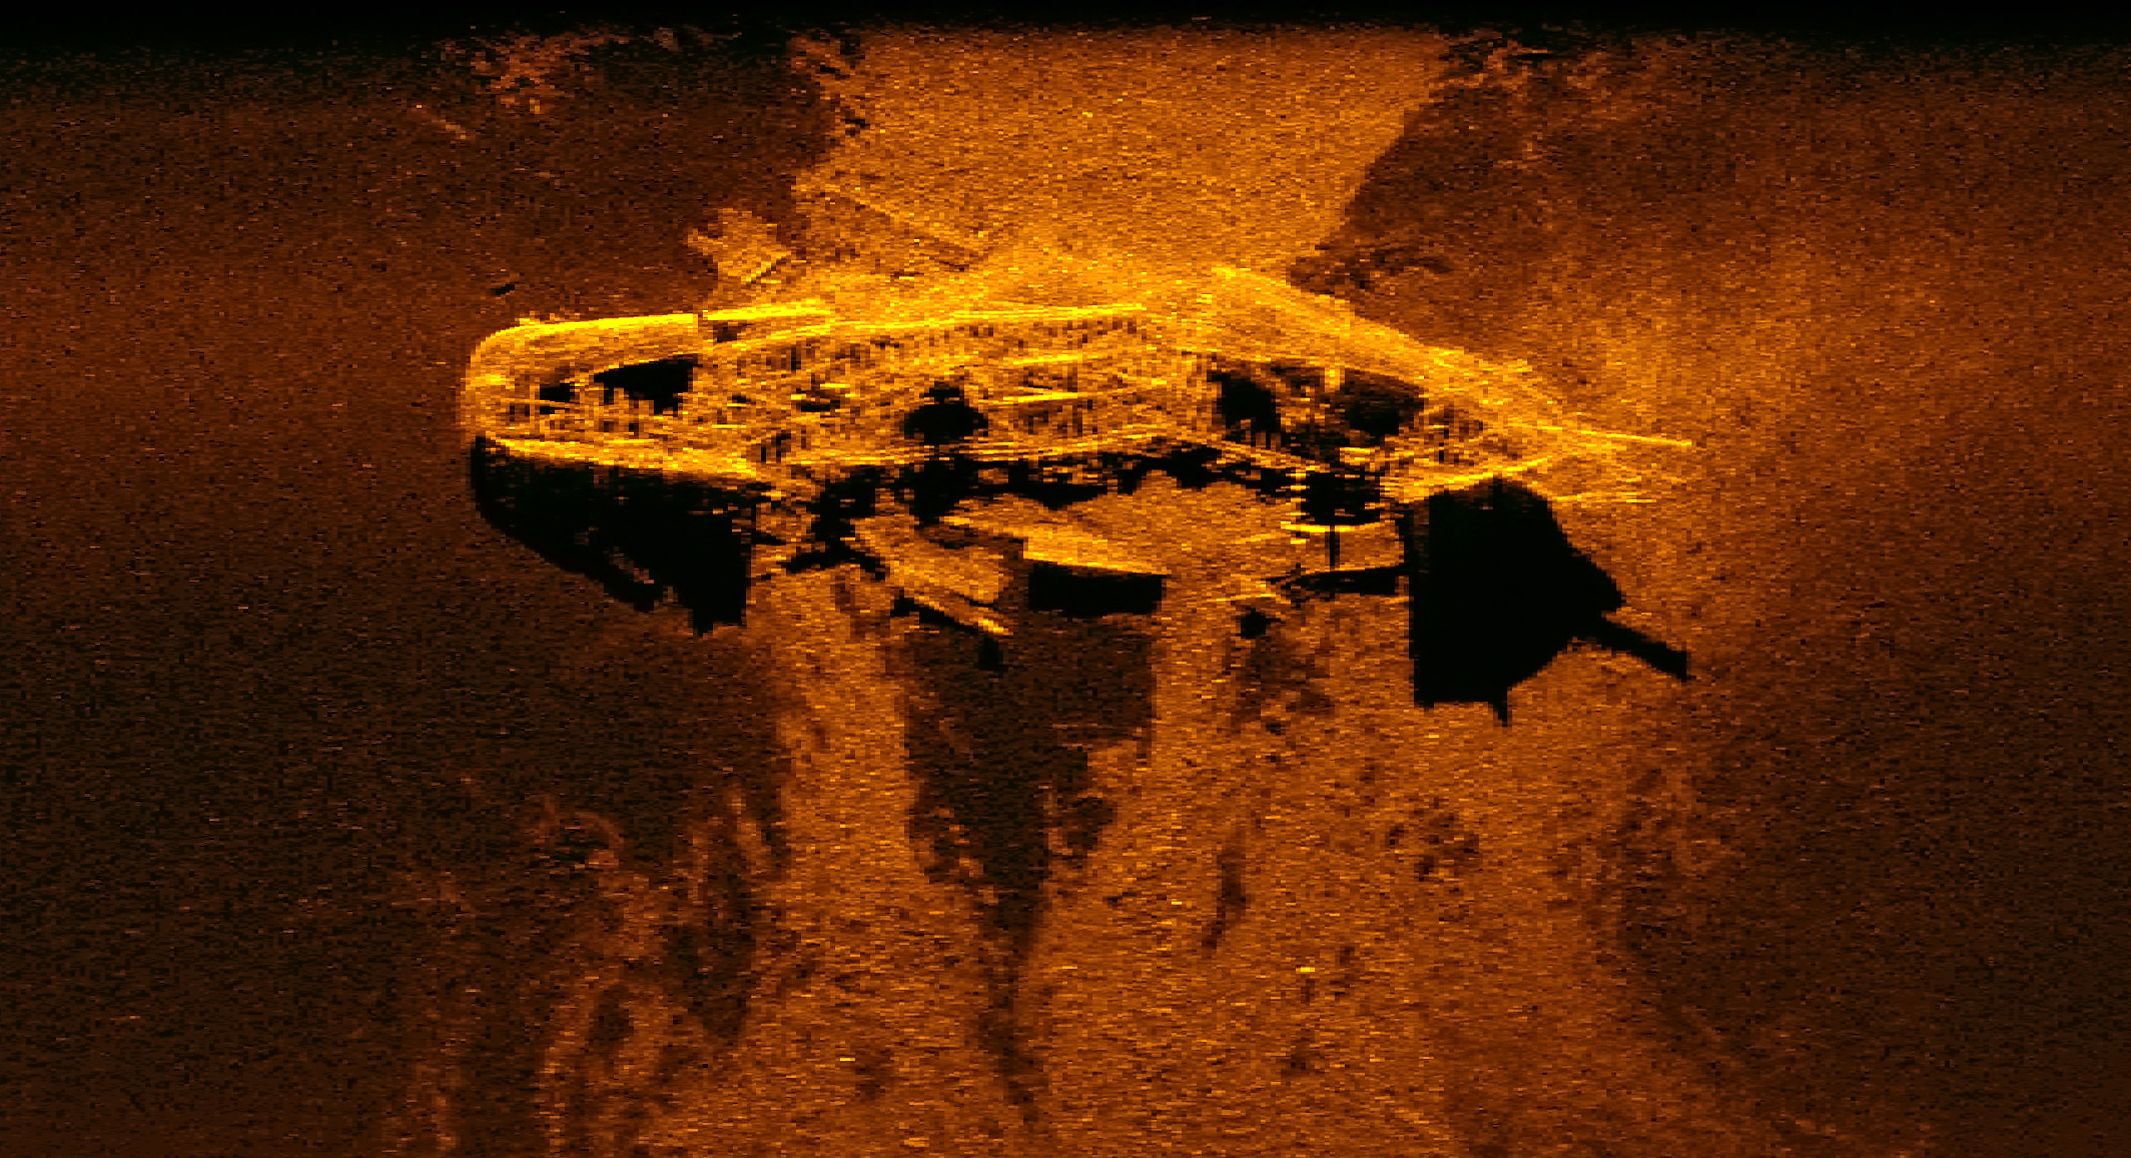 Mh370 Shipwrecks Among Deepest Ever Discovered